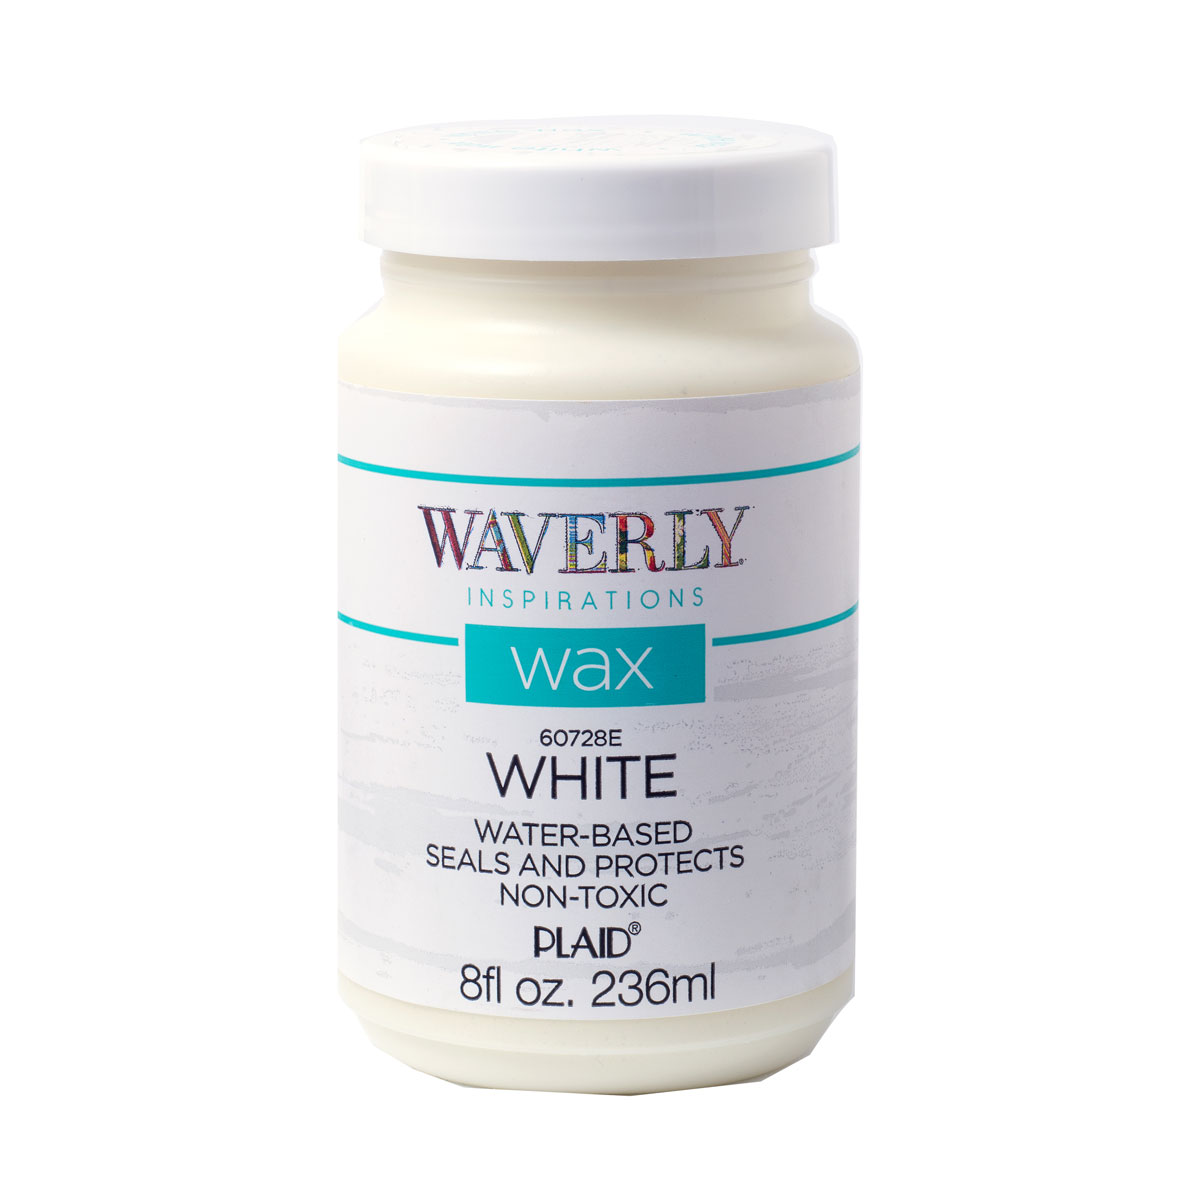 Waverly ® Inspirations Wax - White, 8 oz. - 60728E